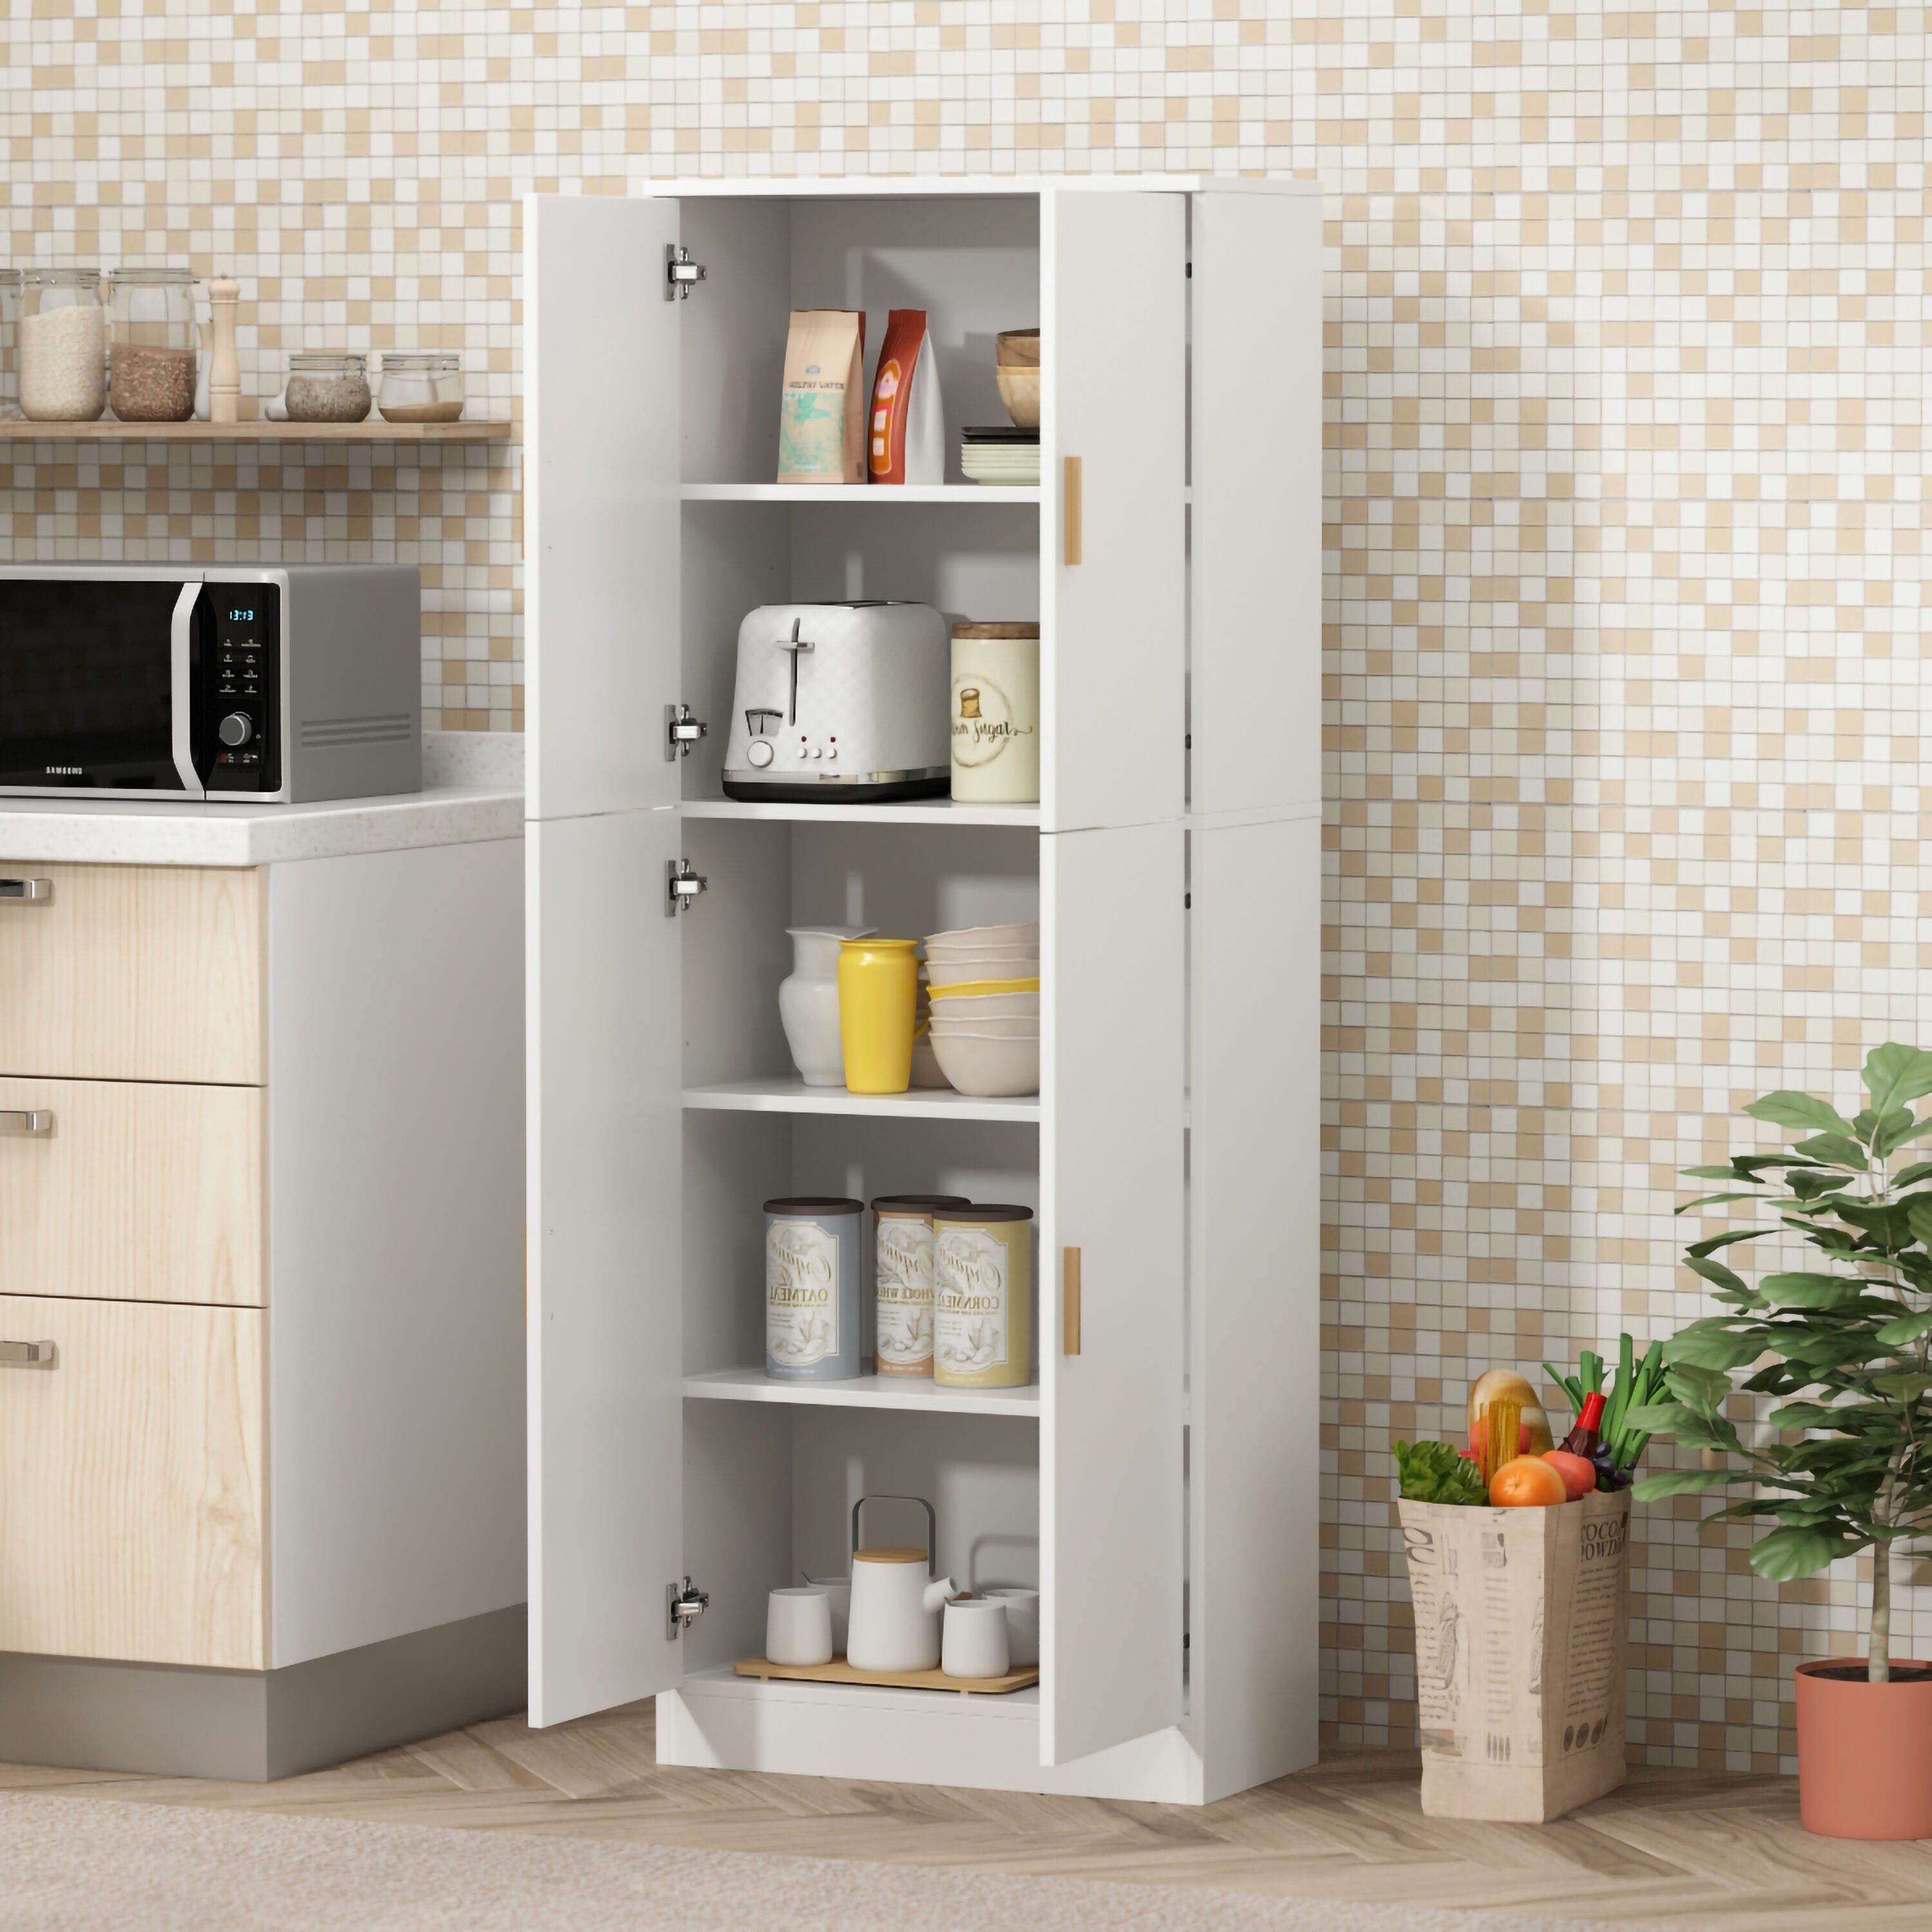 FUFU&GAGA 5-tier Kitchen Pantry Cabinet Storage Hutch in the